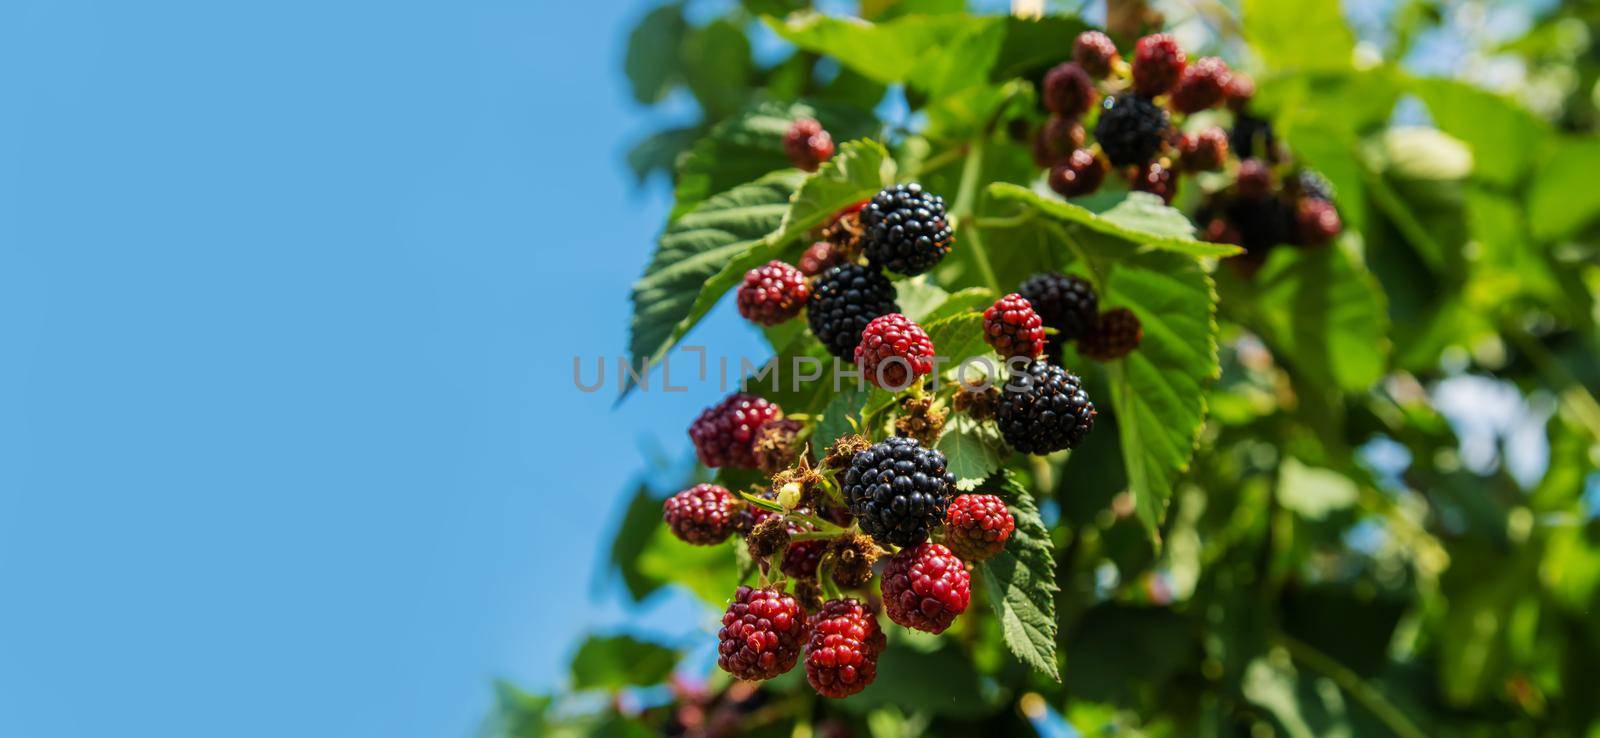 Blackberries grow in the garden. Ripe and unripe blackberries on a bush. by mila1784